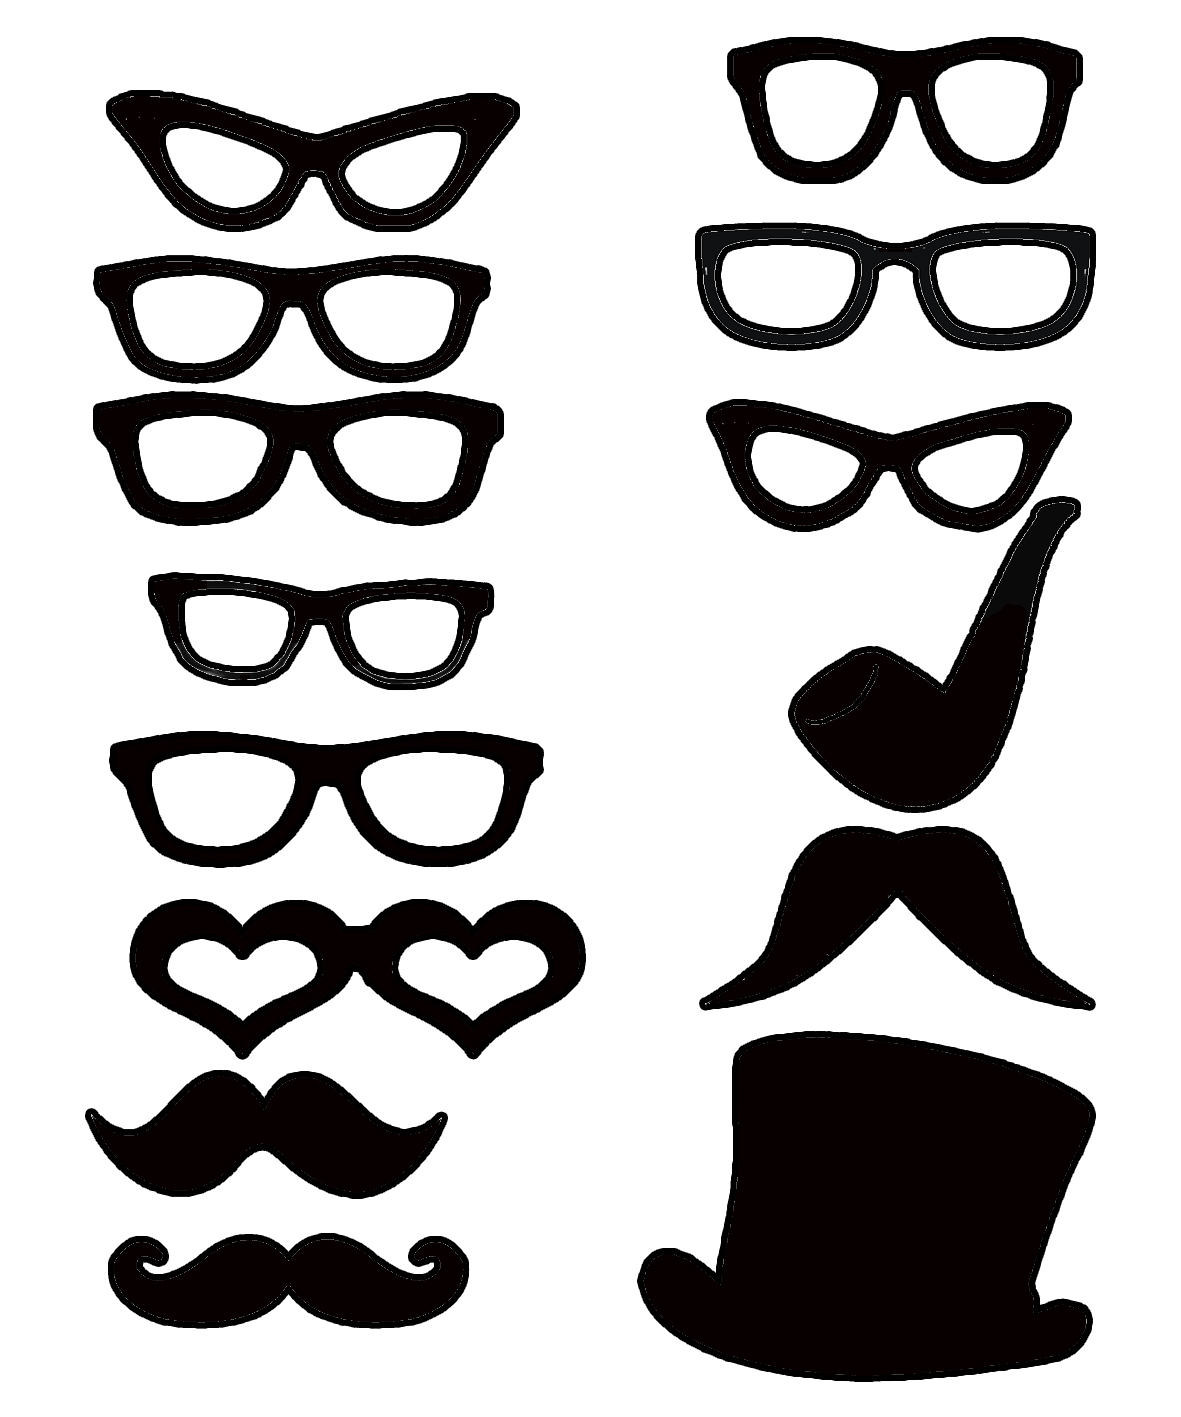 Micro glasses , moustache and hat